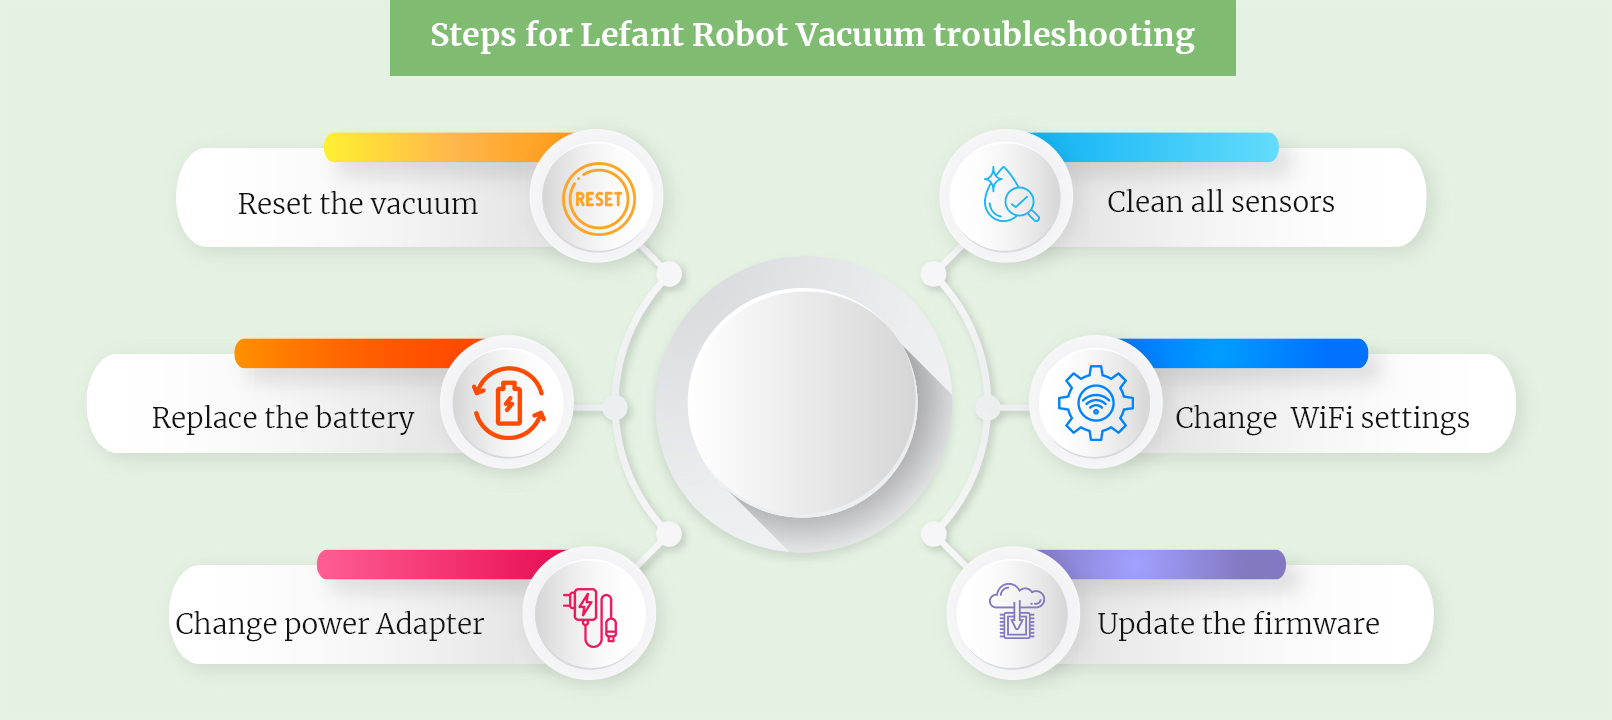 Steps for Lefant Robot Vacuum troubleshooting